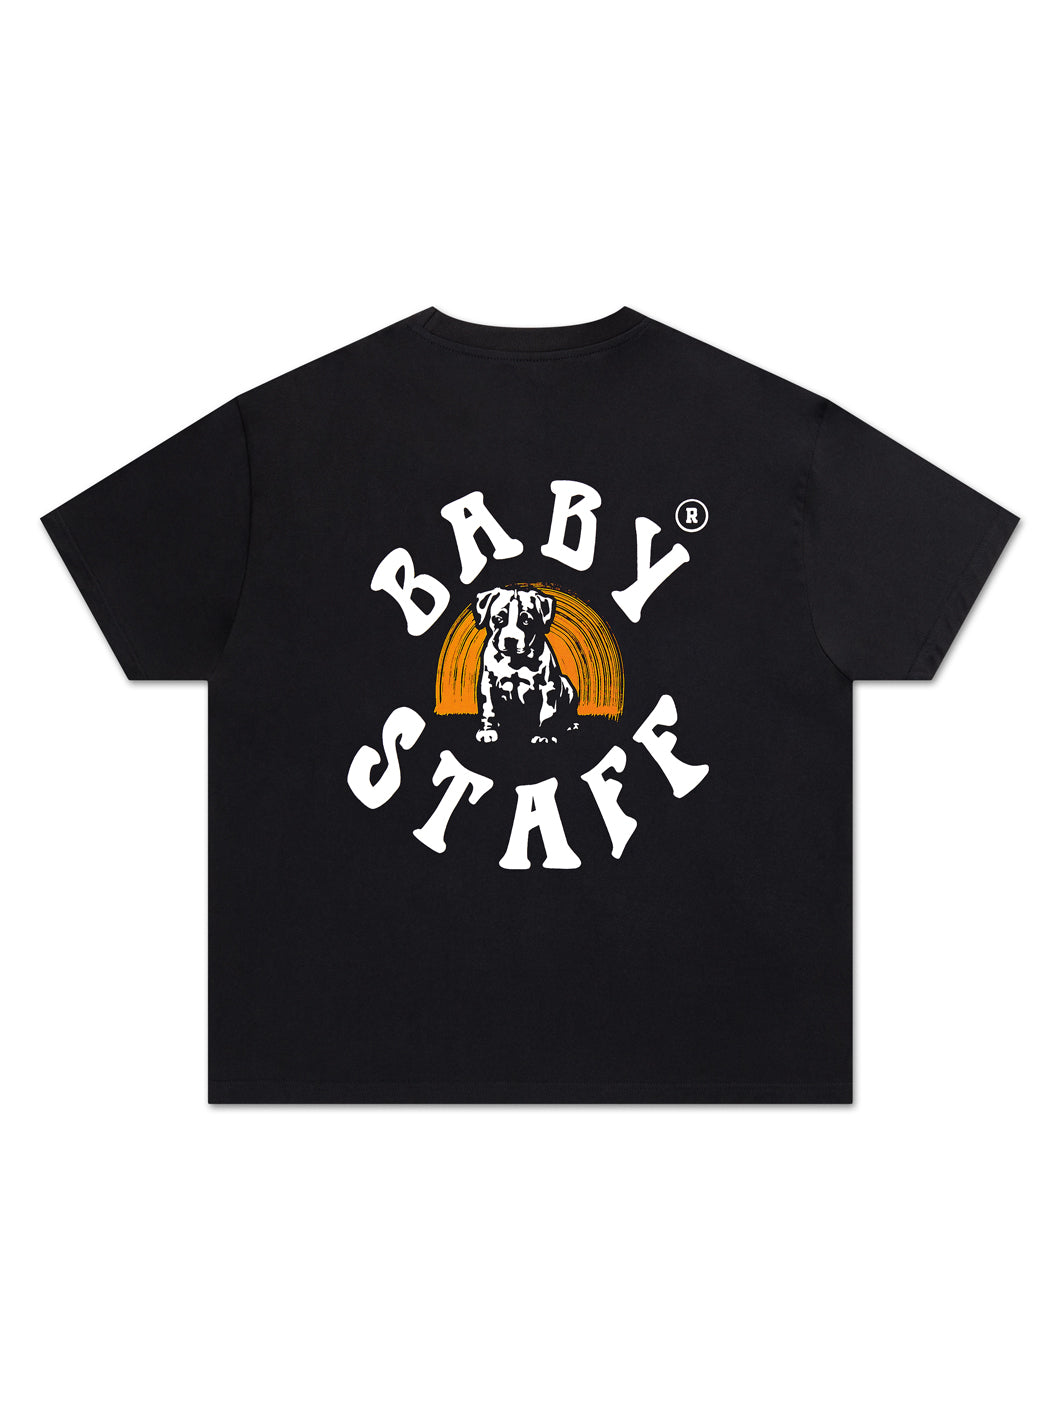 babystaff senya oversized t-shirt - 20